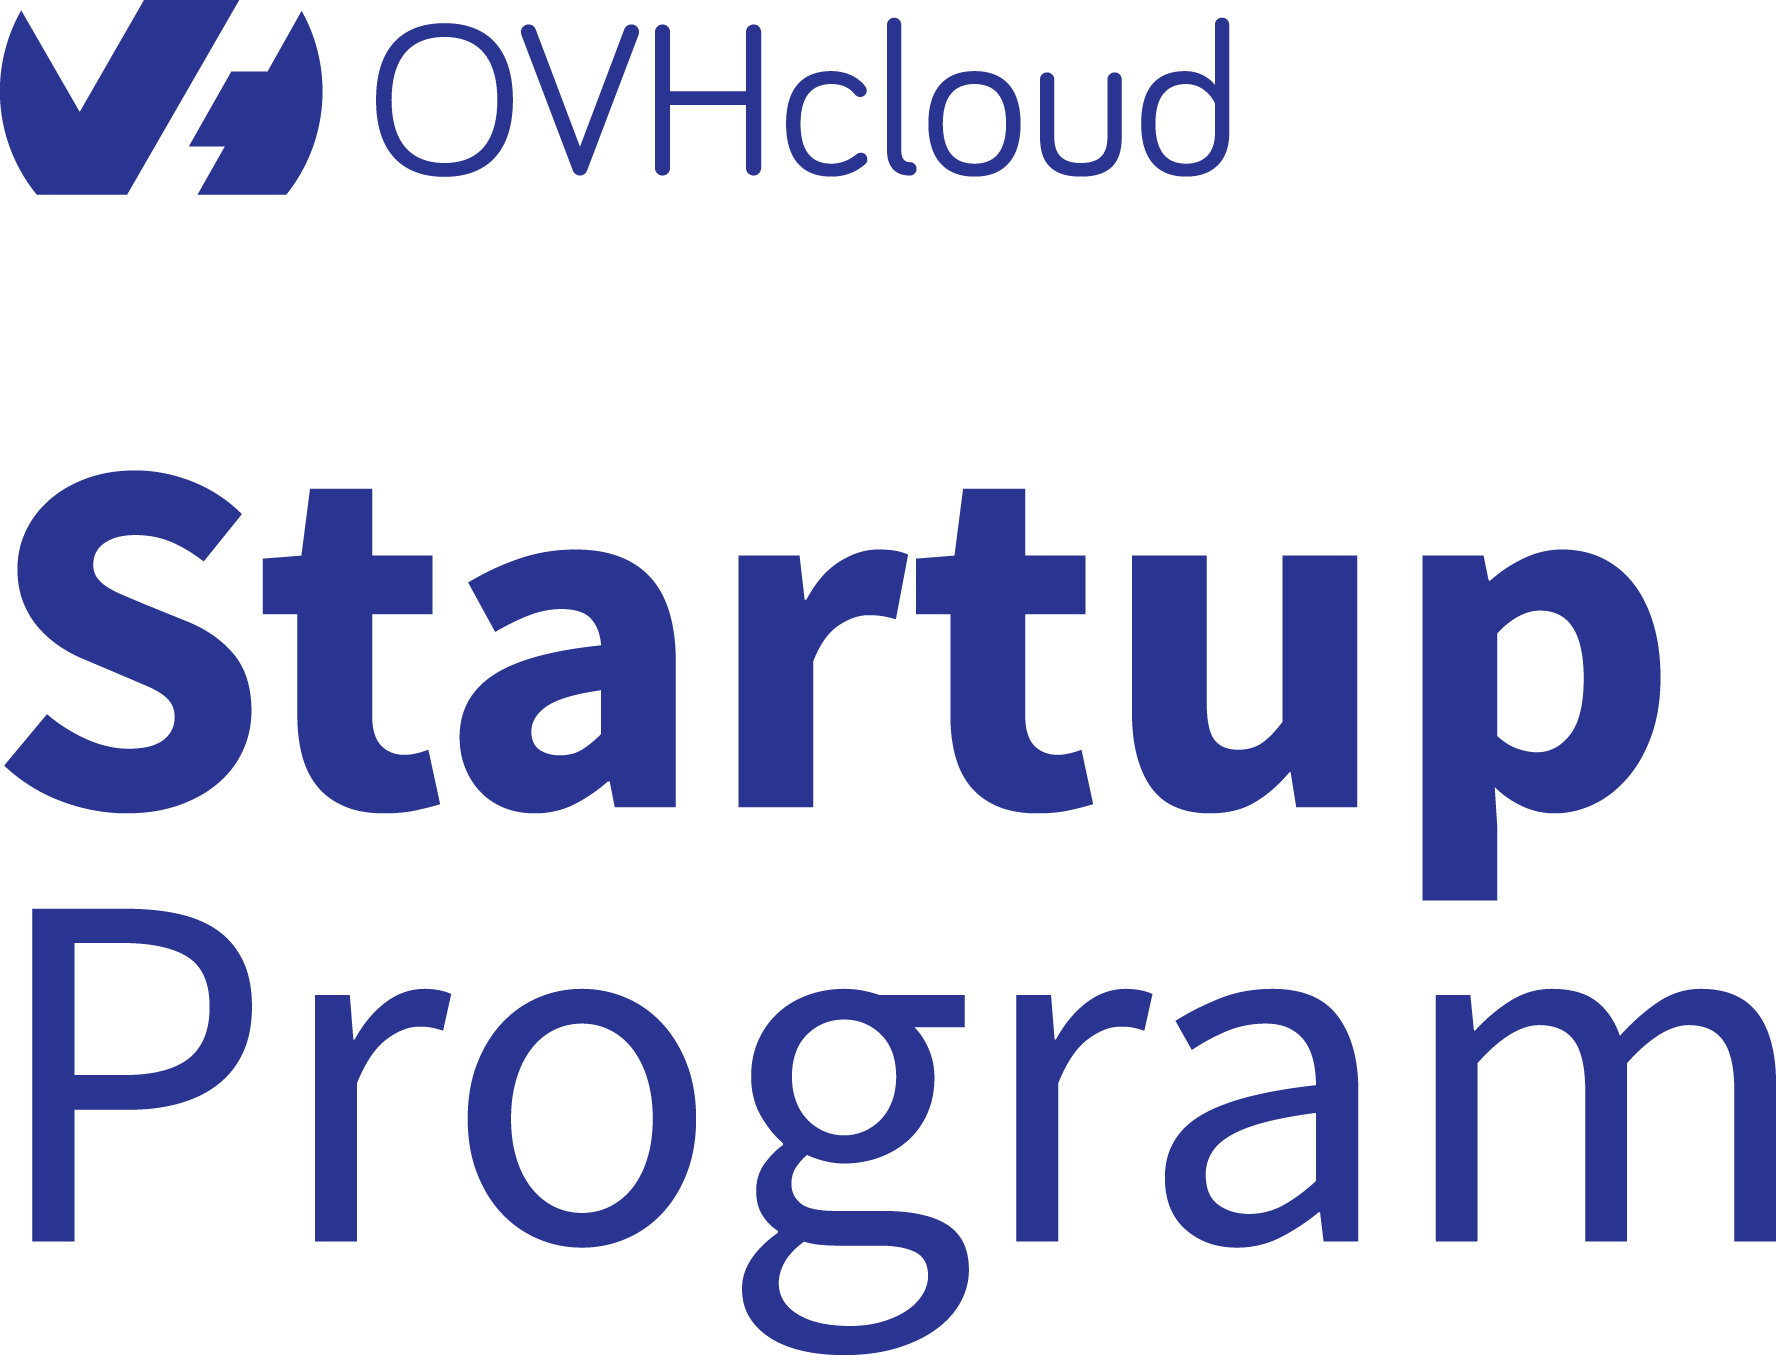 ovh cloud startup program